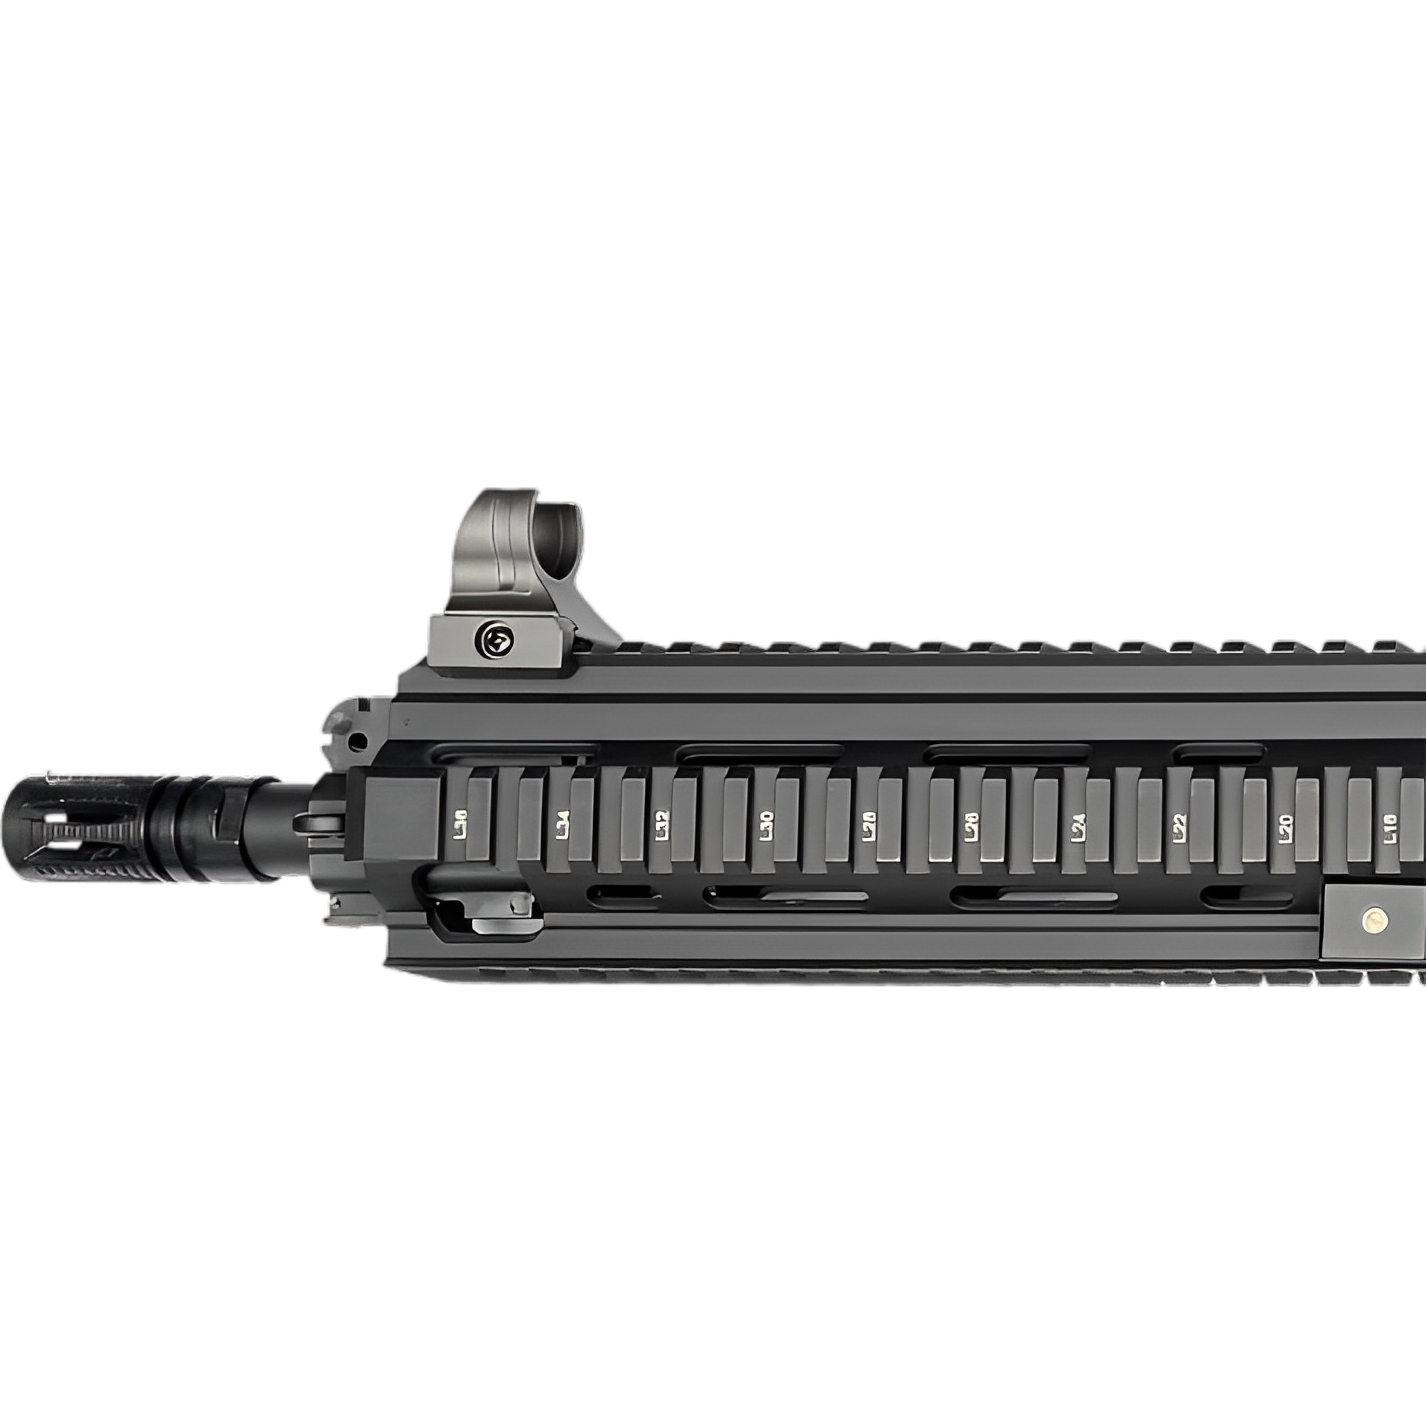 HK416D - ELECTRIC GEL BLASTER